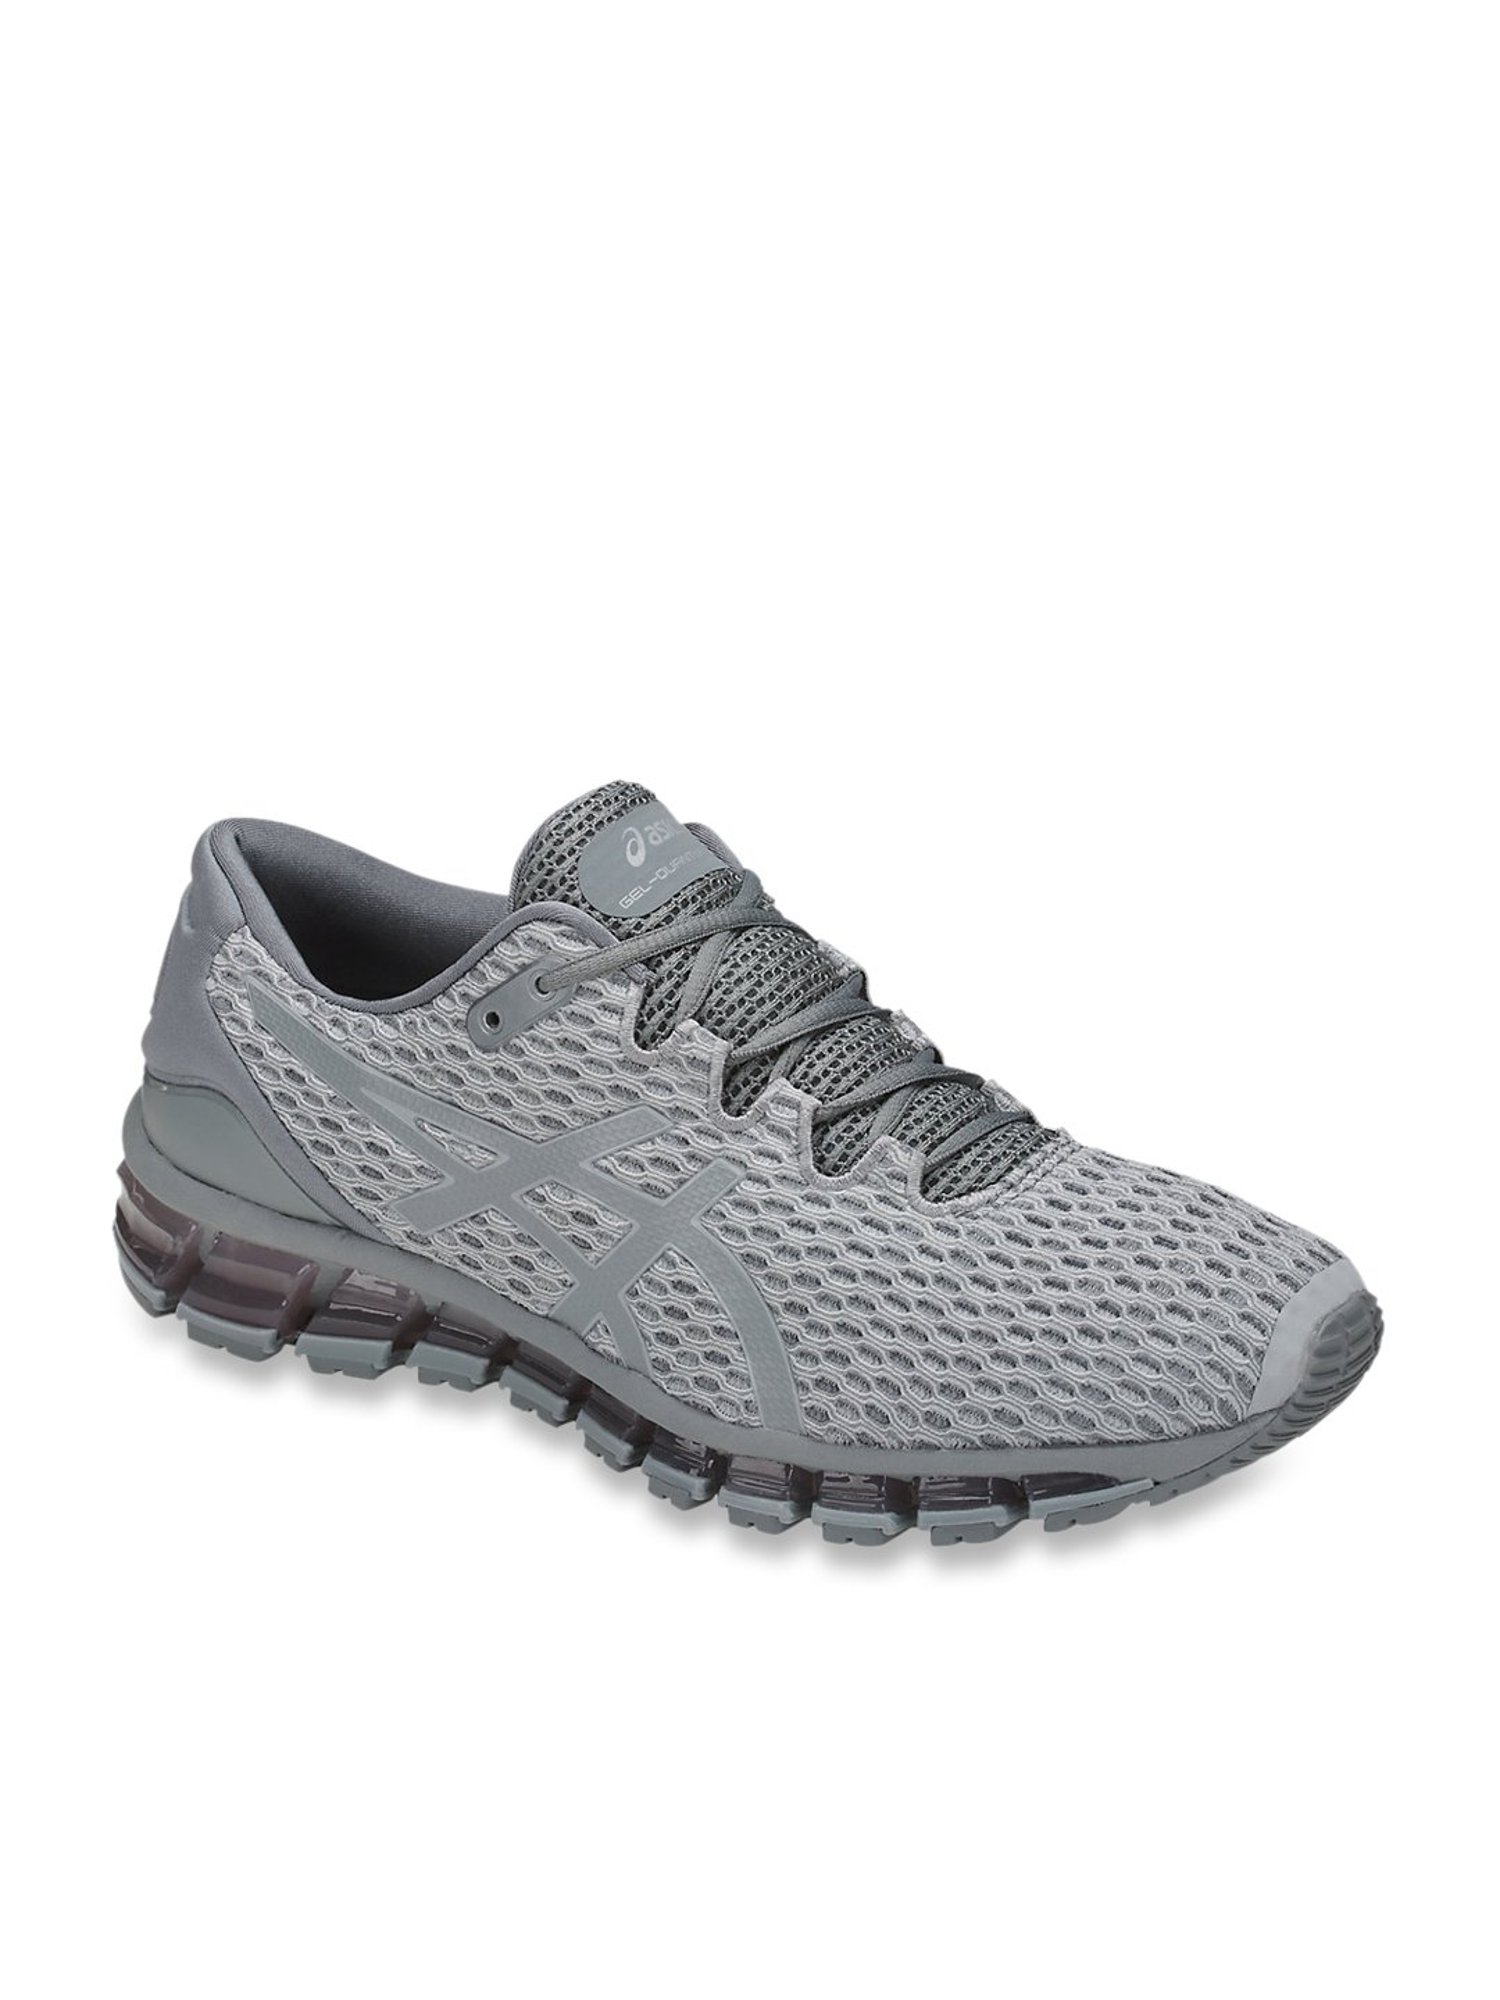 Buy Asics Men's GEL-Quantum 360 Shift Mx Grey Running Shoes Men at Best Price @ Tata CLiQ